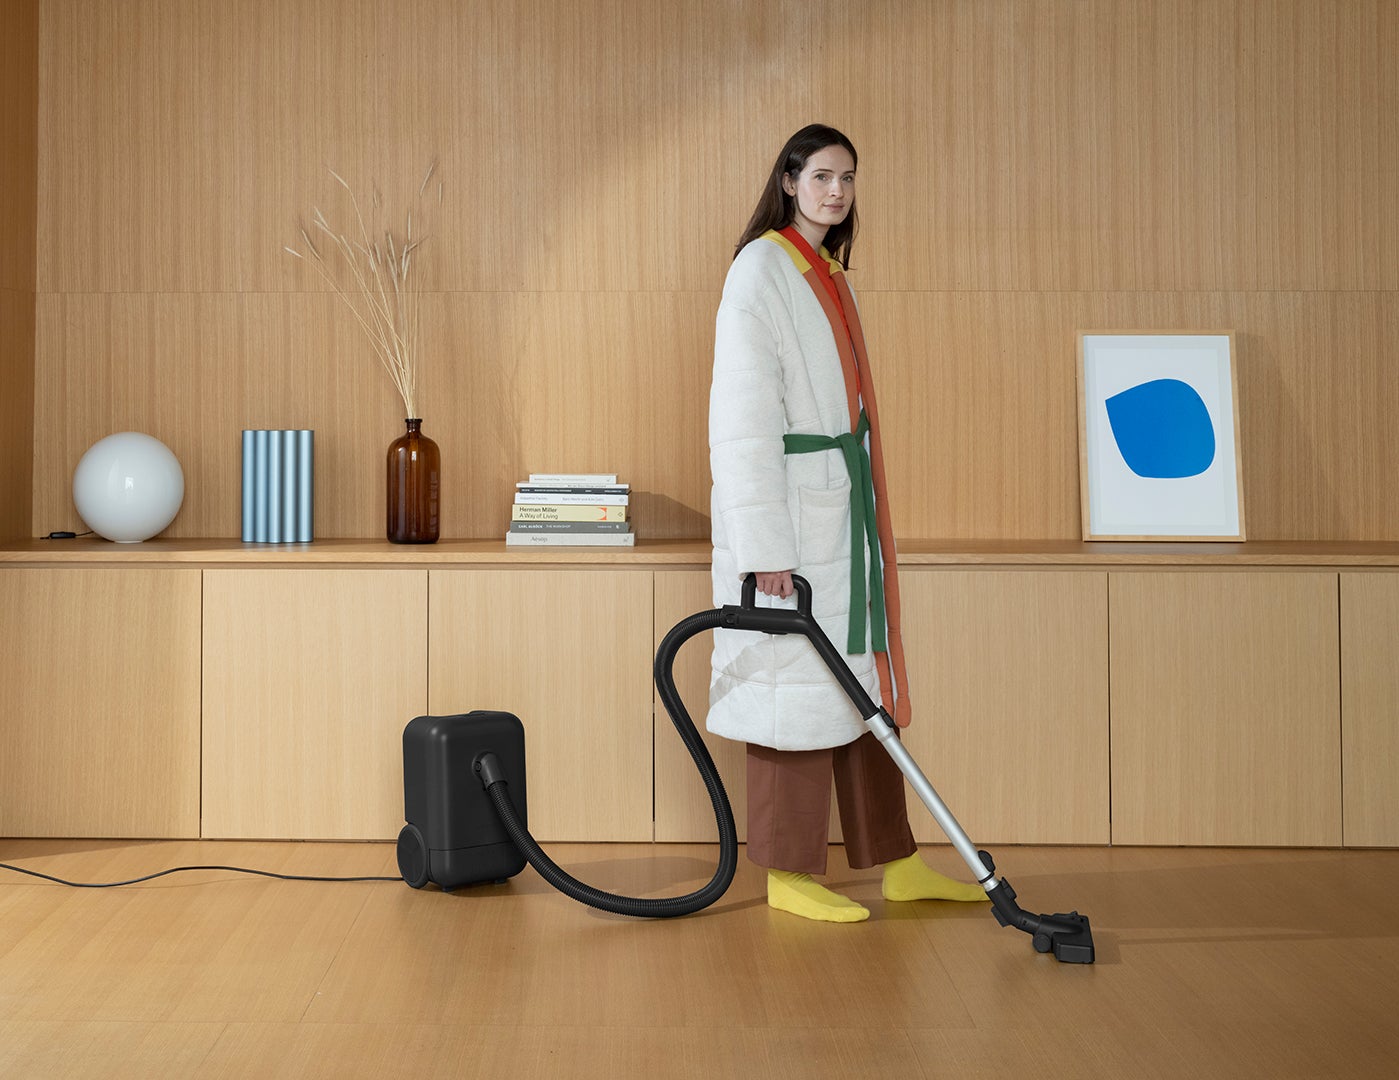 woman holding vacuum wearing housecoat